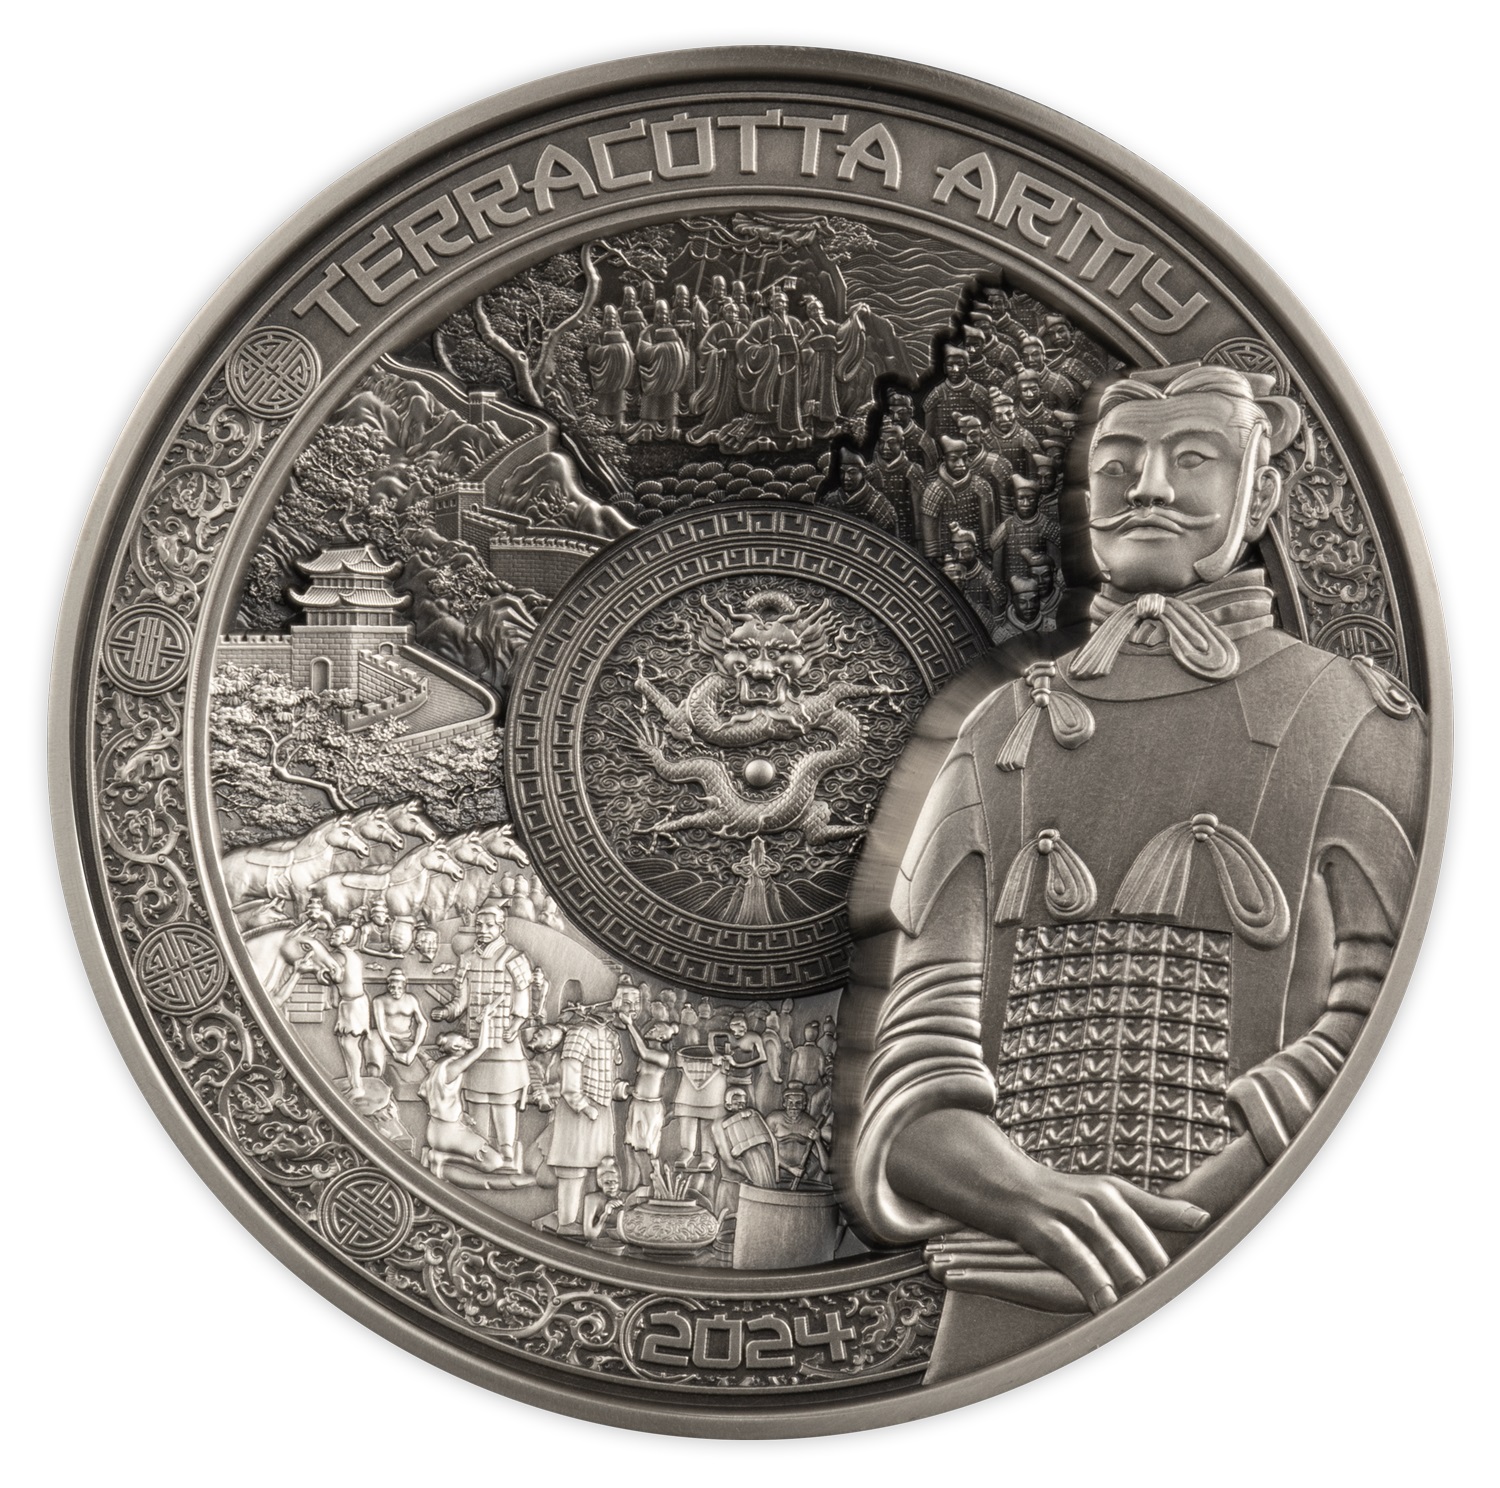 (W193.1.25.D.2024.1.kg.Ag.1572990117) 25 Dollars Samoa 2024 1 kilogram Antique silver - Terracotta Army Reverse (zoom)